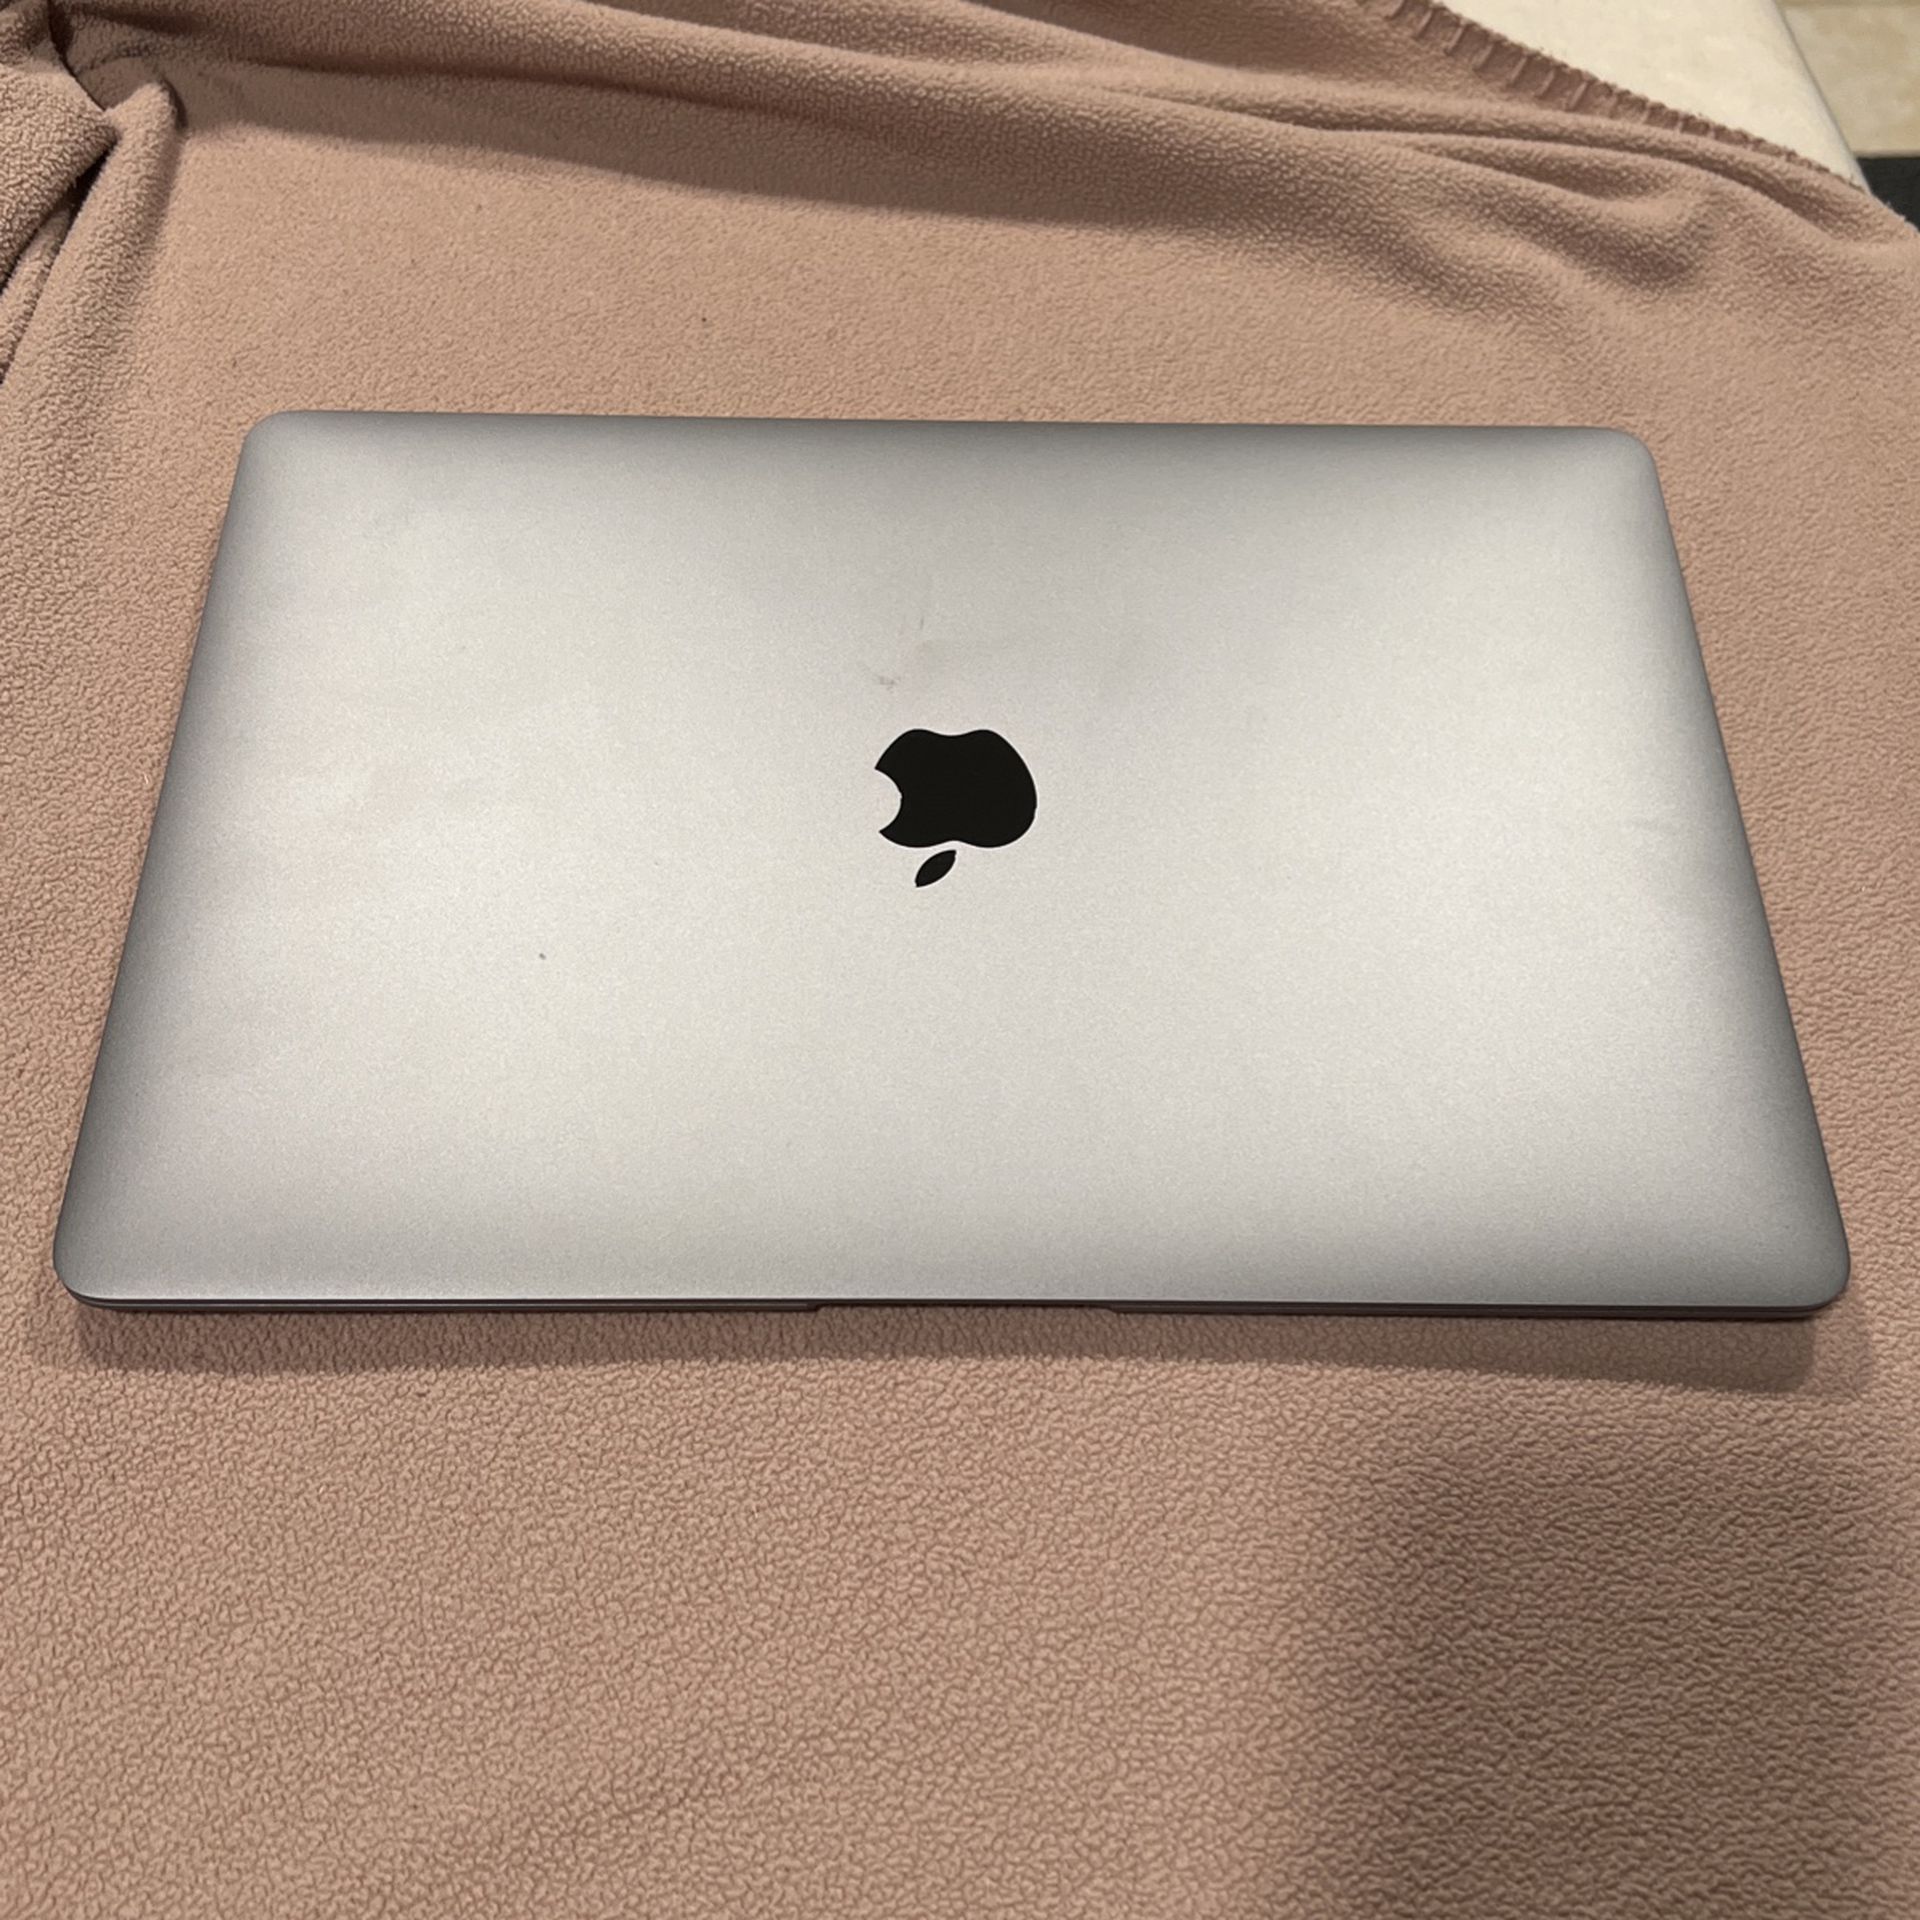 Apple AirMac Laptop M1 2020